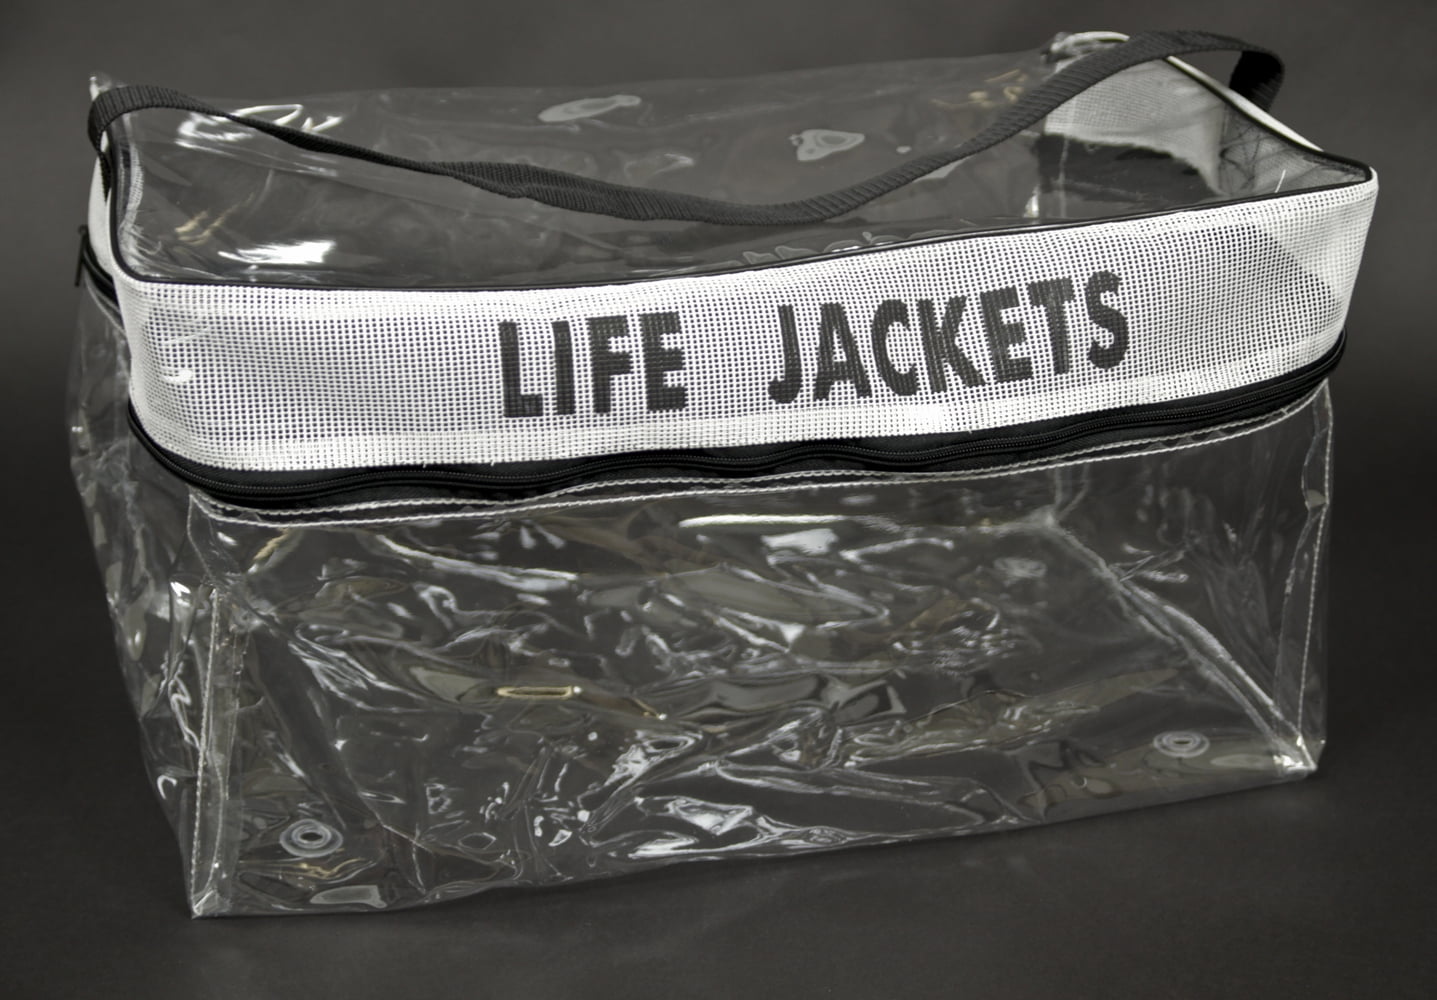 life jacket storage bag